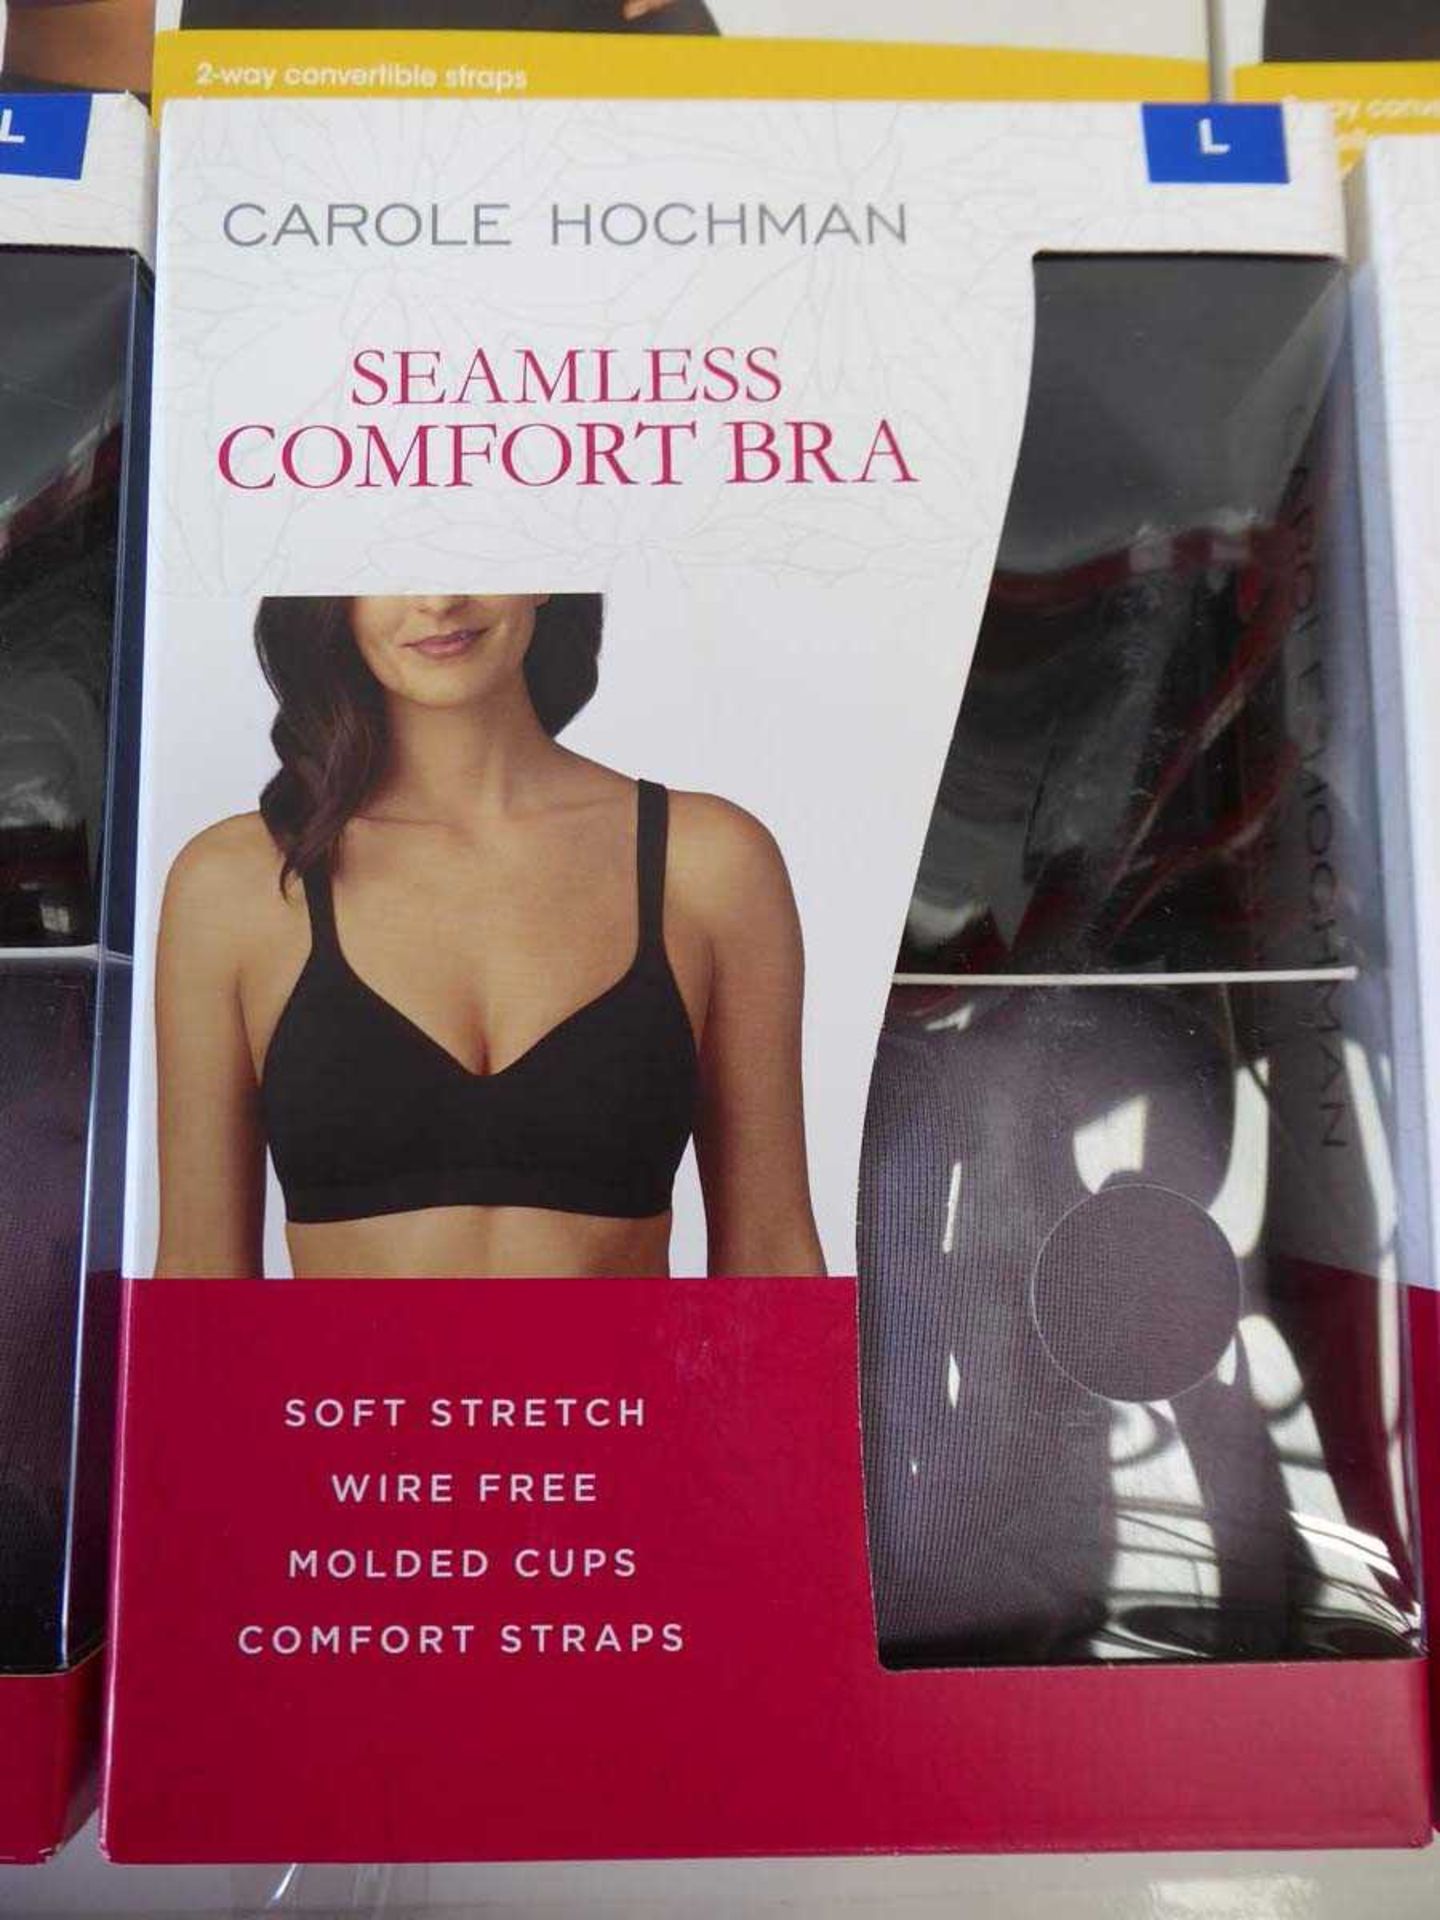 +VAT 11 packs of 2 pack Carole Hochman comfort bras, 5 packs of 2 pack Lole ladies sports bras, 2 - Image 4 of 4